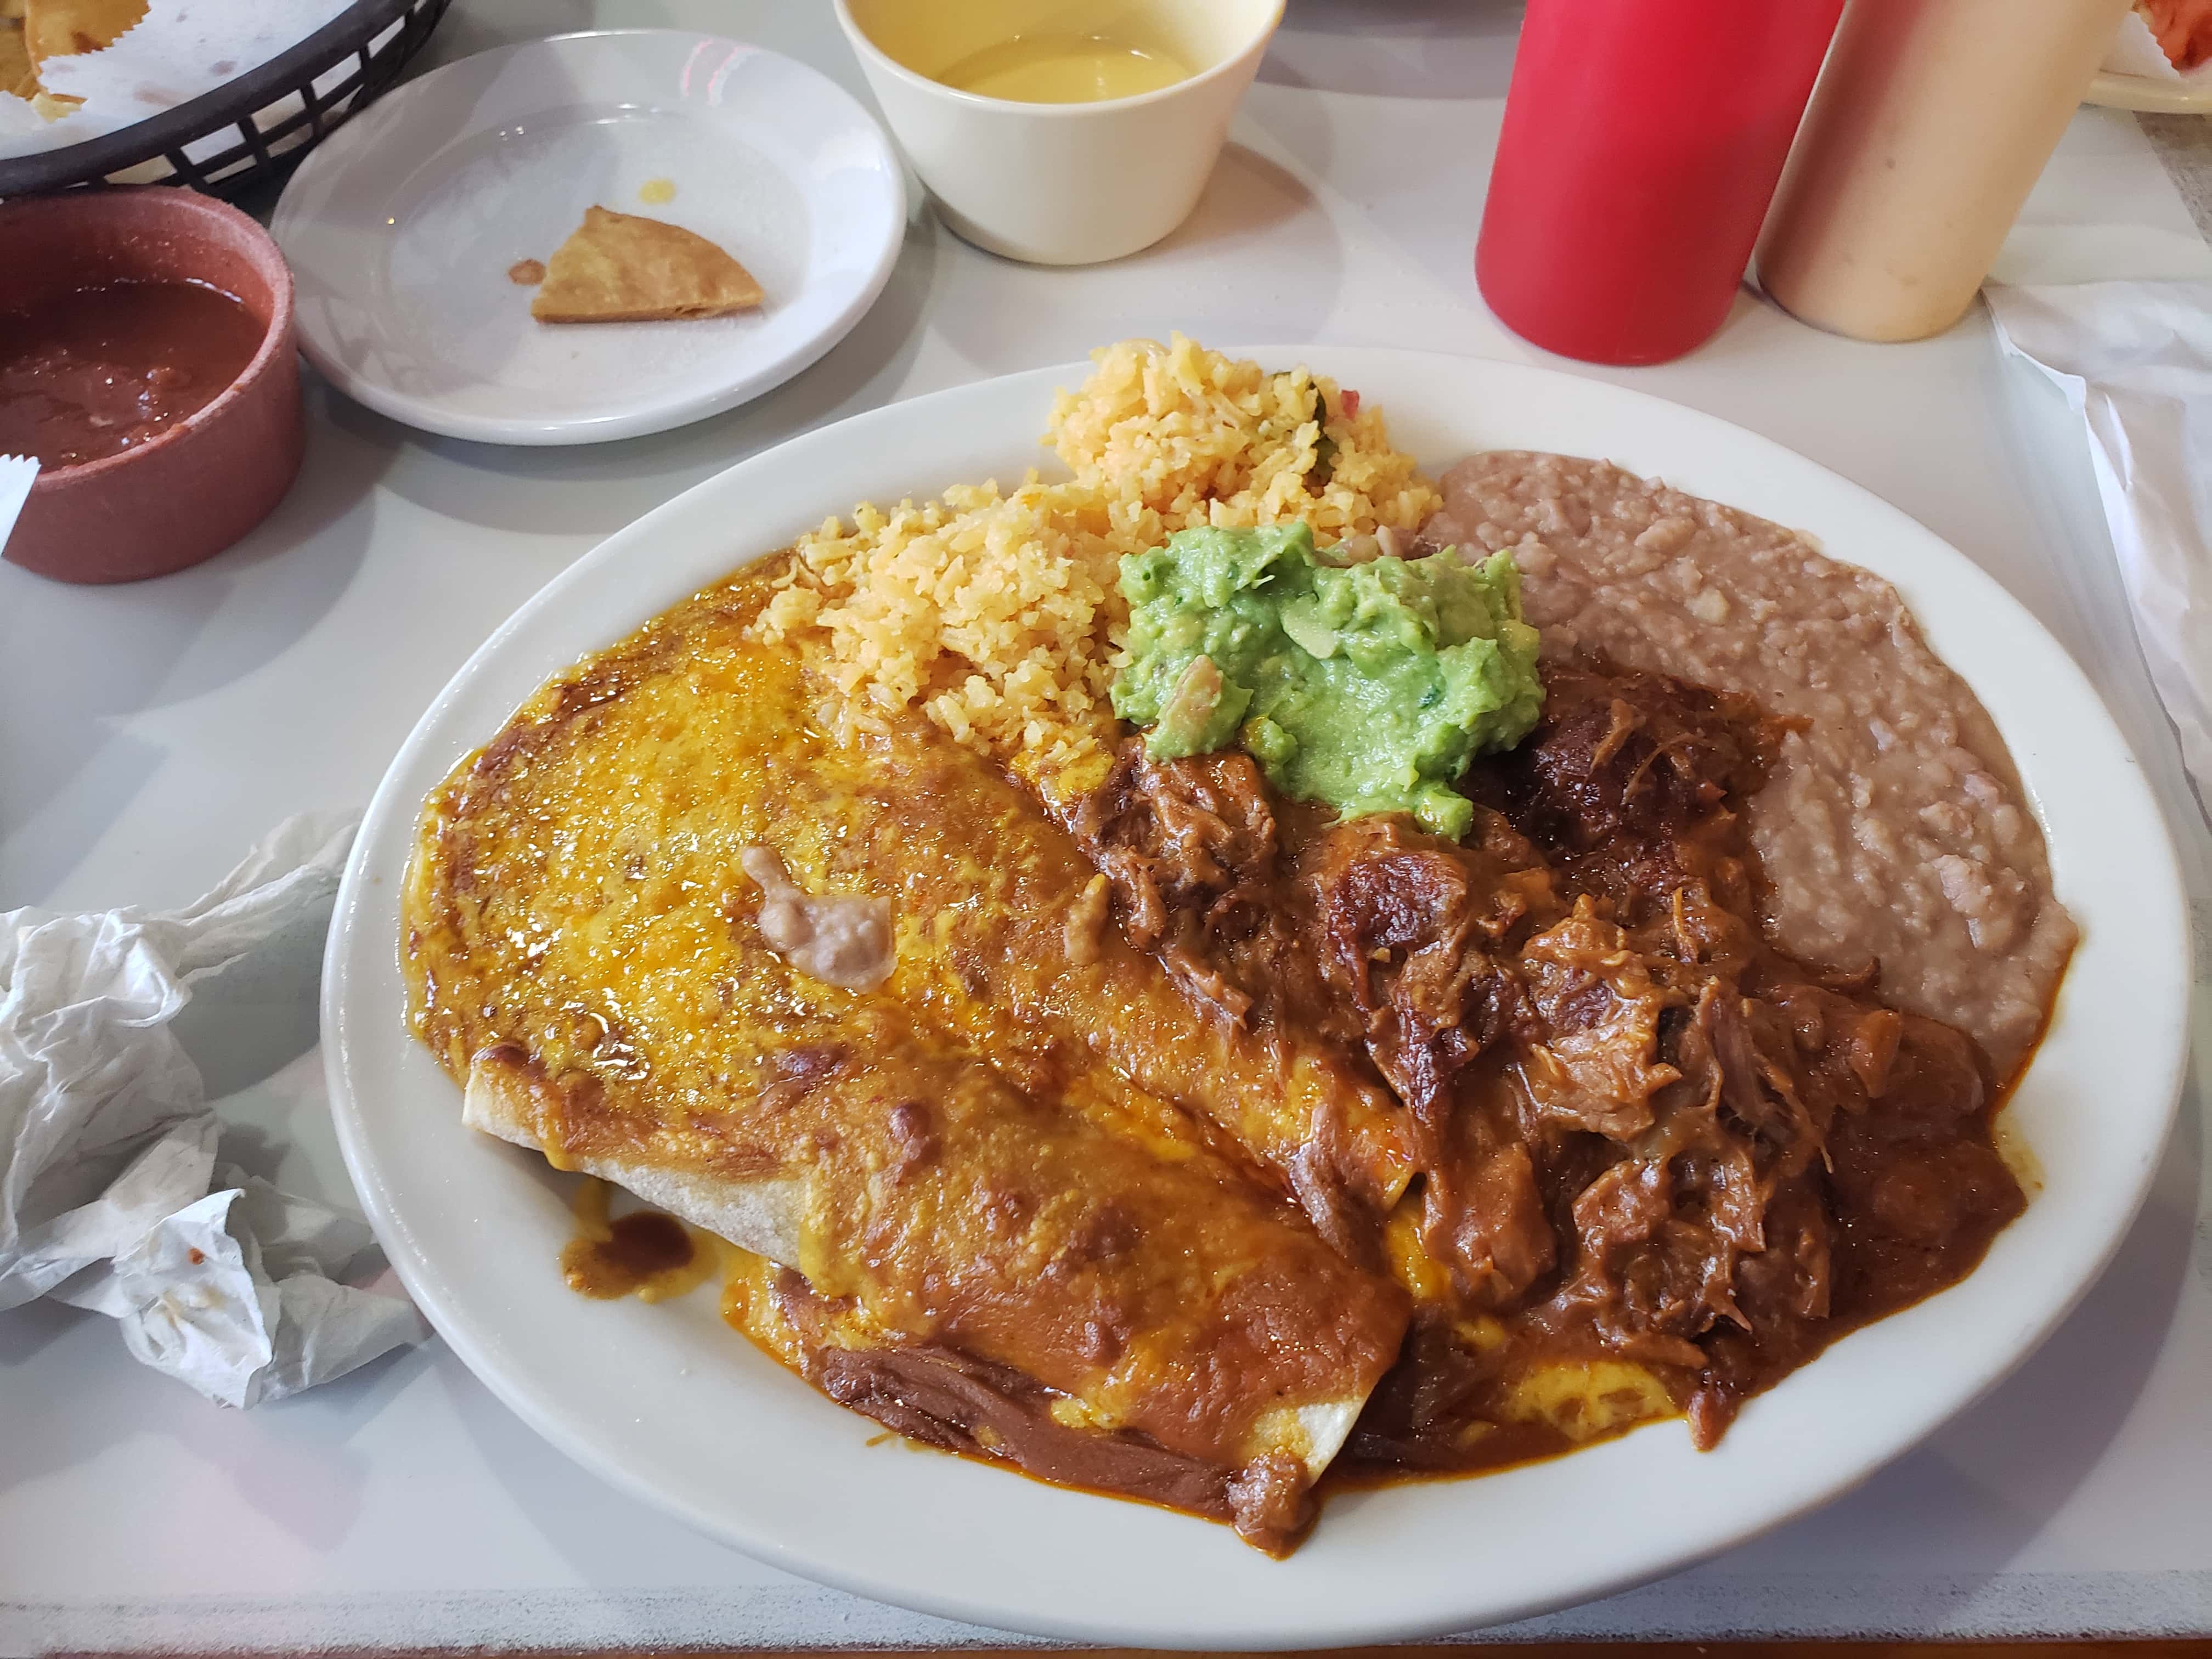 Agave Jalisco Restaurant @ Staples St. - Corpus Christi, TX, US, closest mexican restaurant